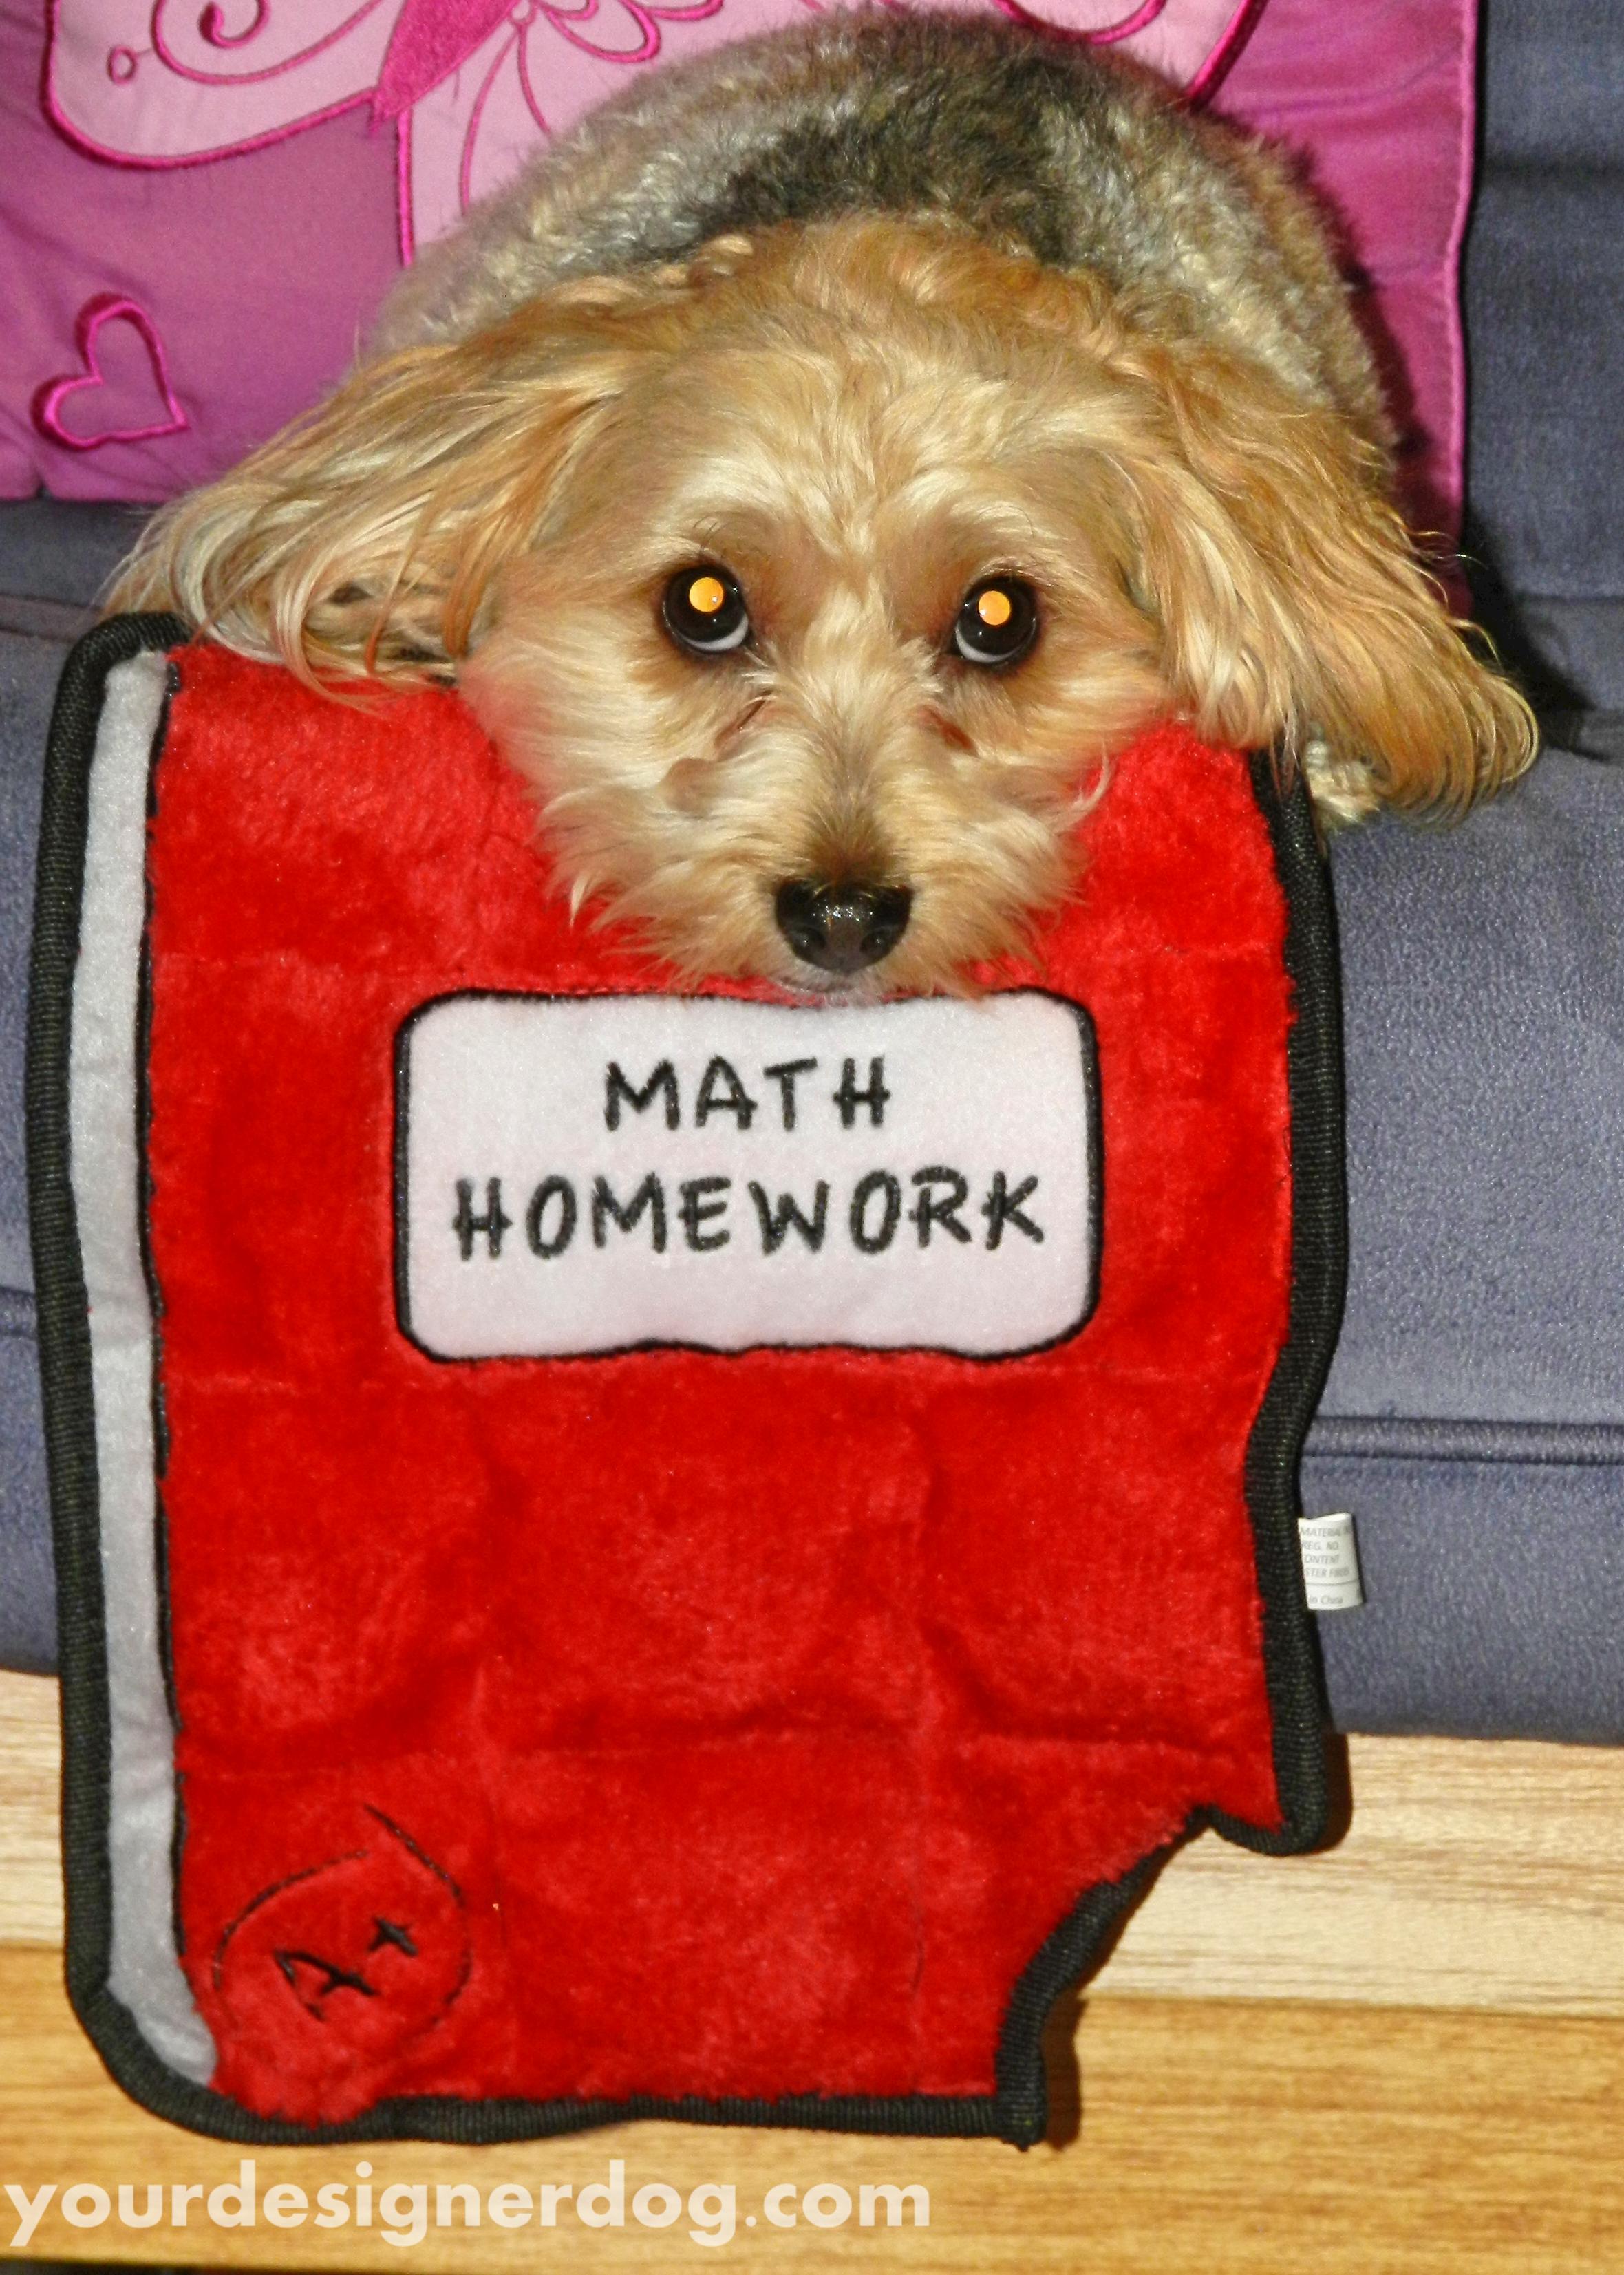 my dog ate my homework poster